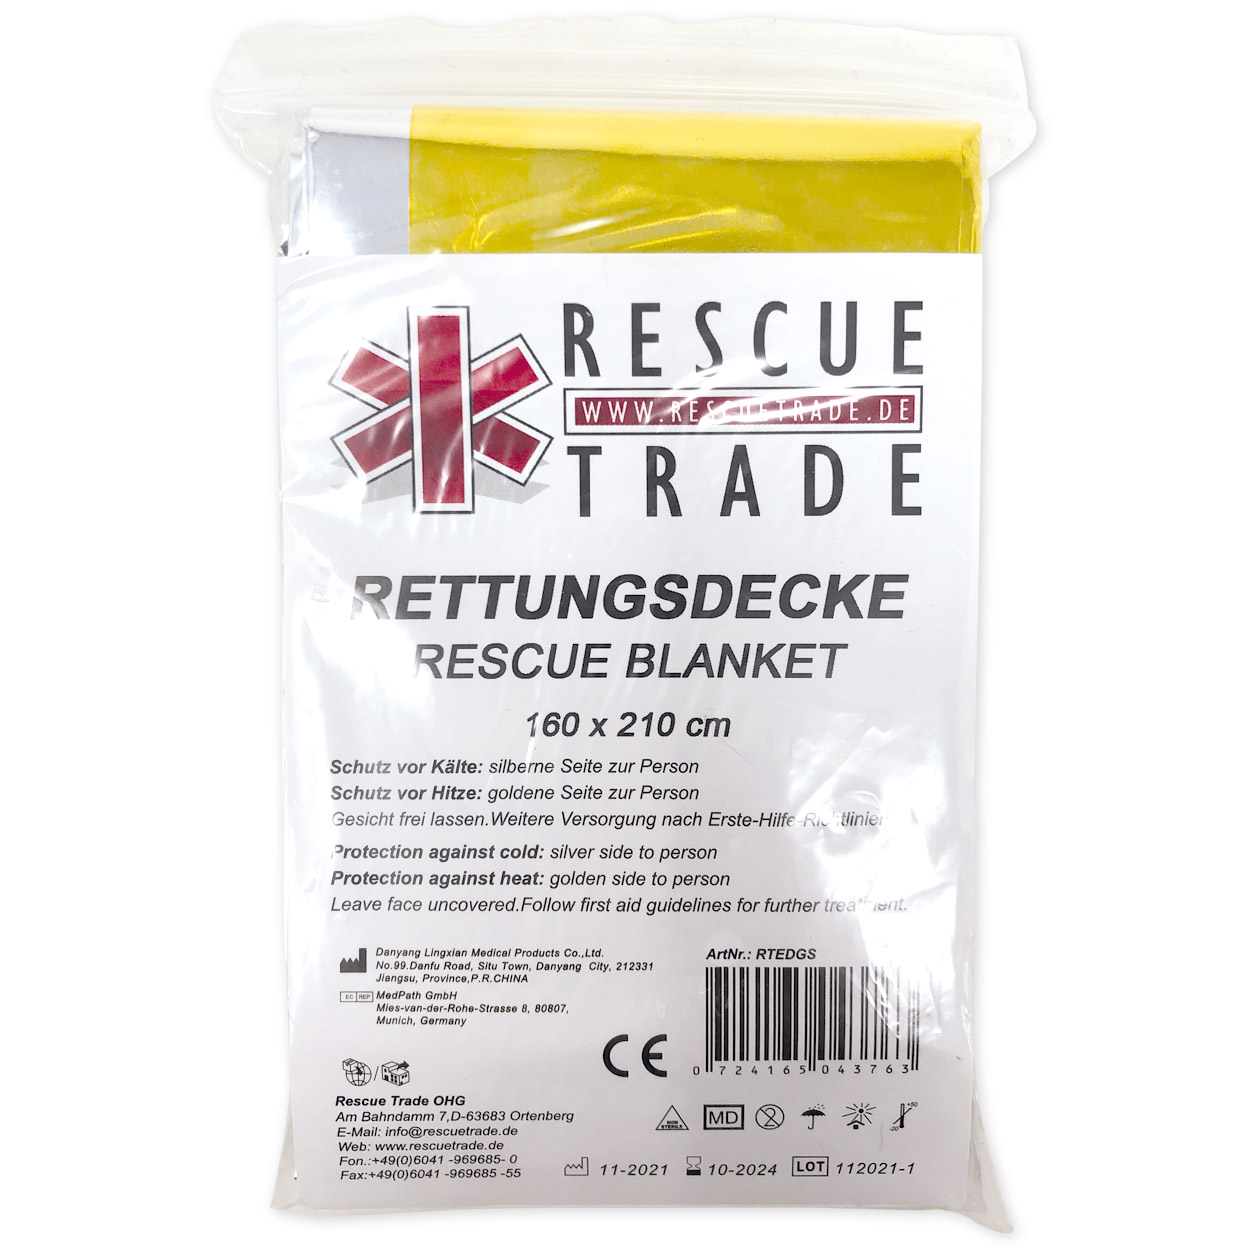 RescueTrade Rettungsdecke gold-silber 210 x 160 cm